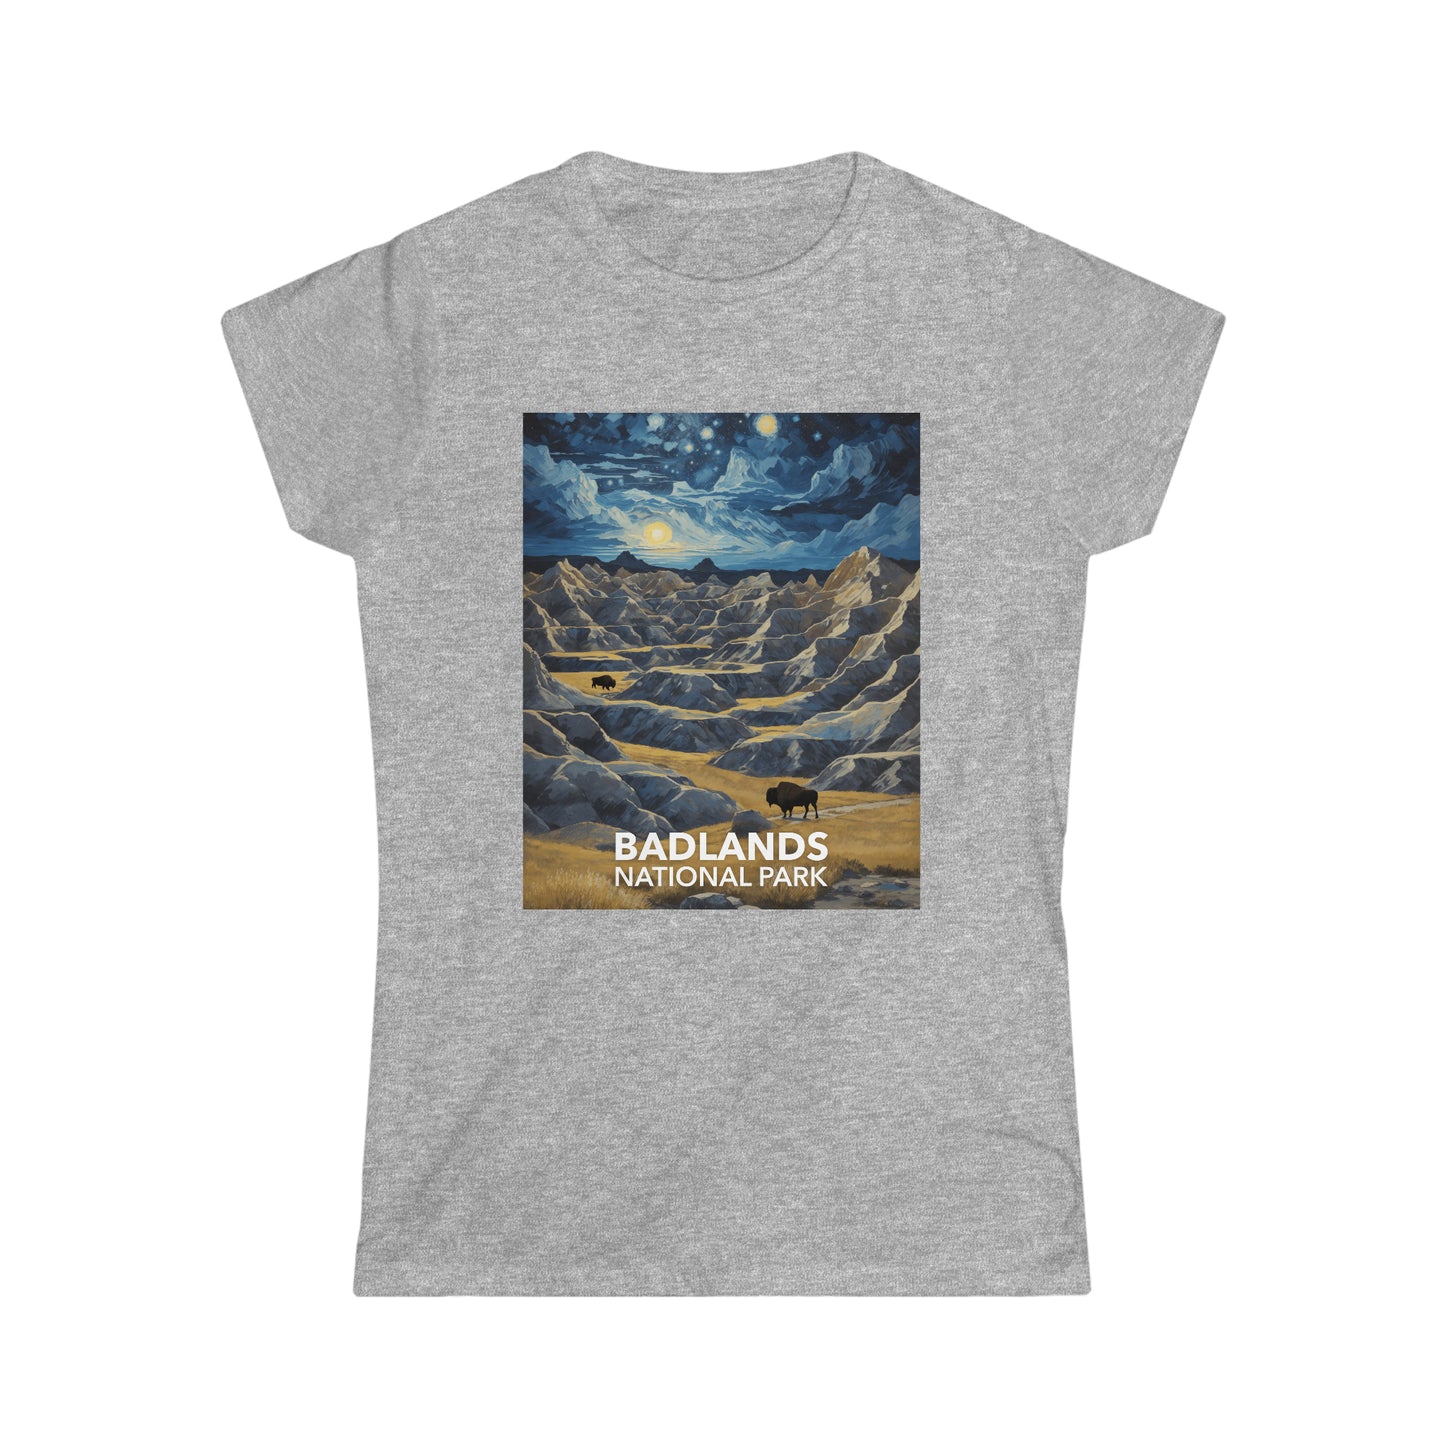 Badlands National Park T-Shirt - Women's Starry Night